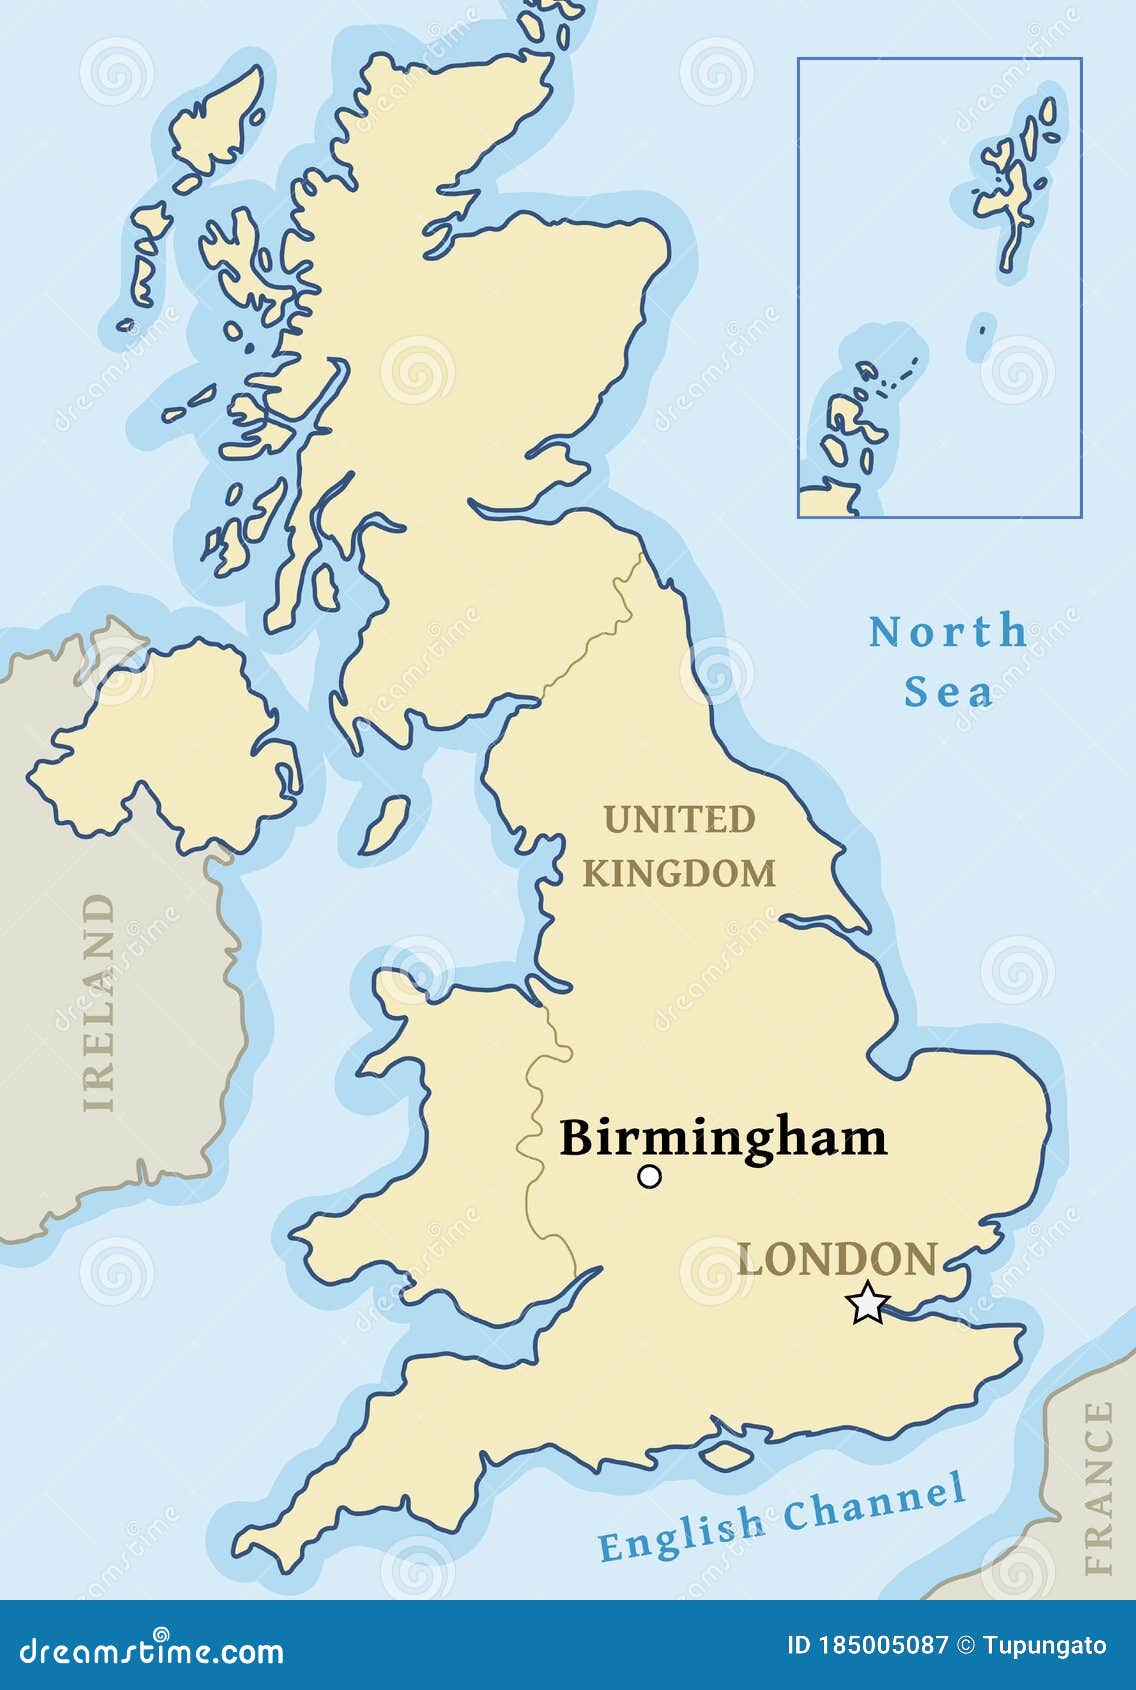 Birmingham UK map location stock vector. Illustration of kingdom